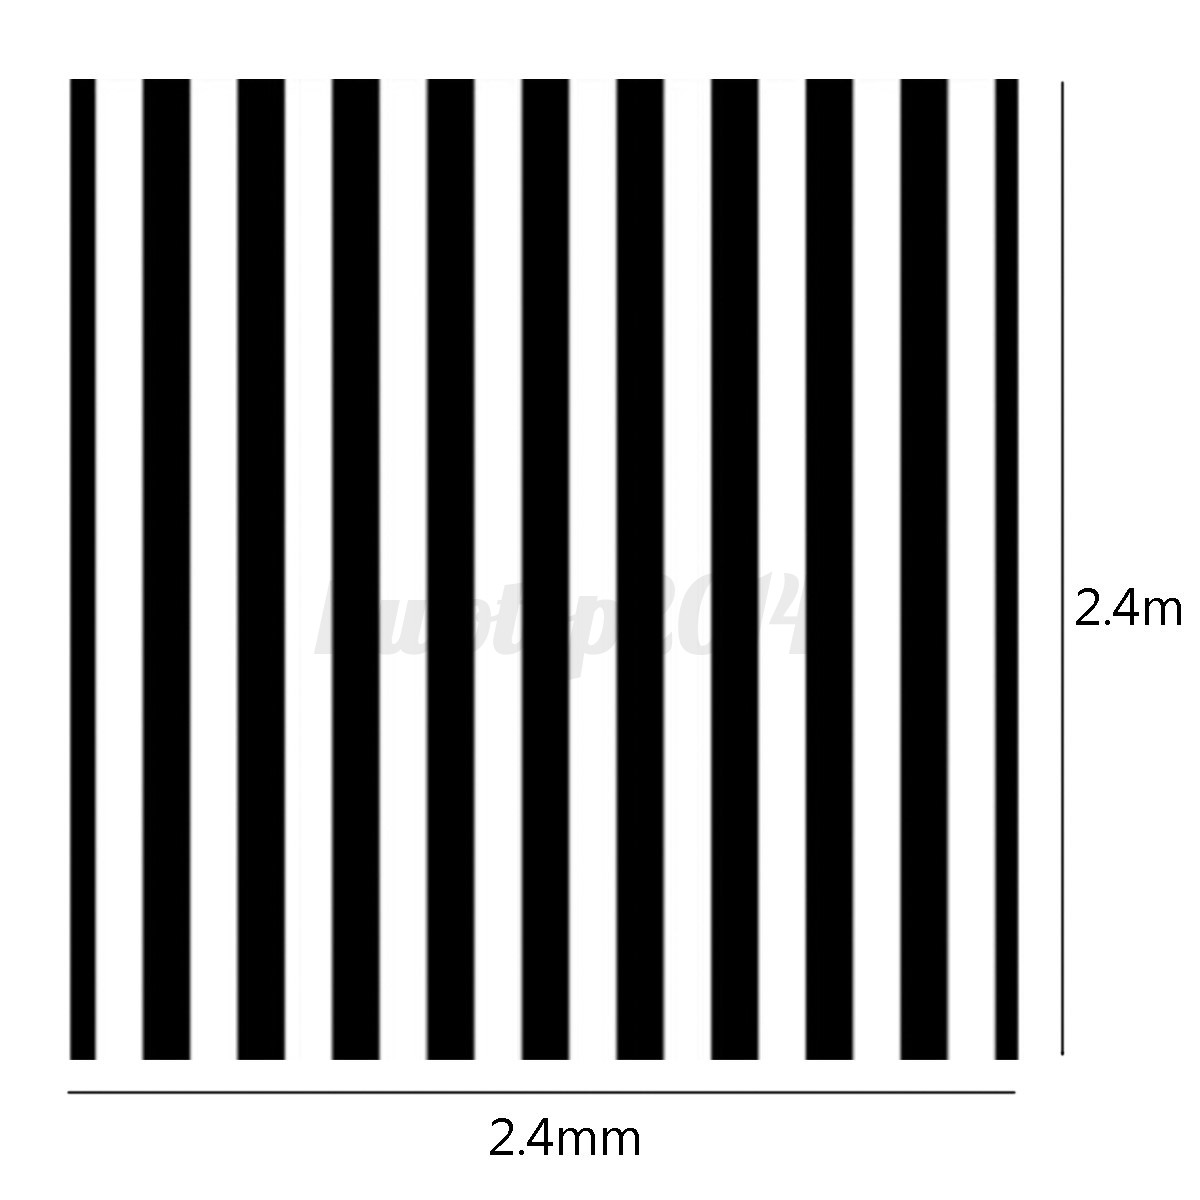 stripes white with black stripes or